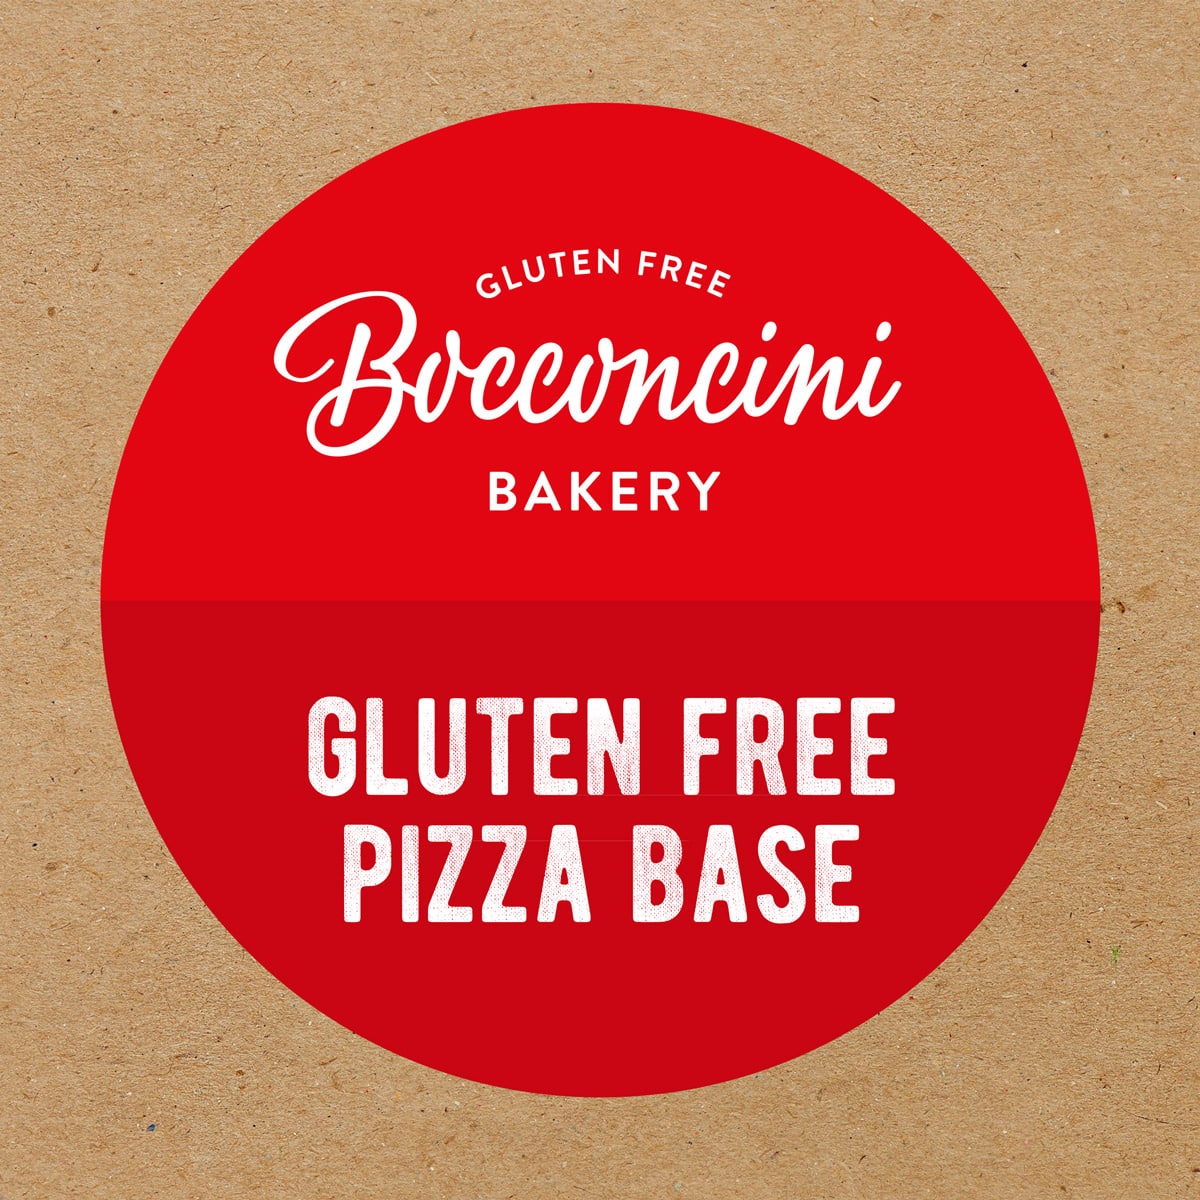 Bocconcini Bakery Brand Refresh & Visual Identity